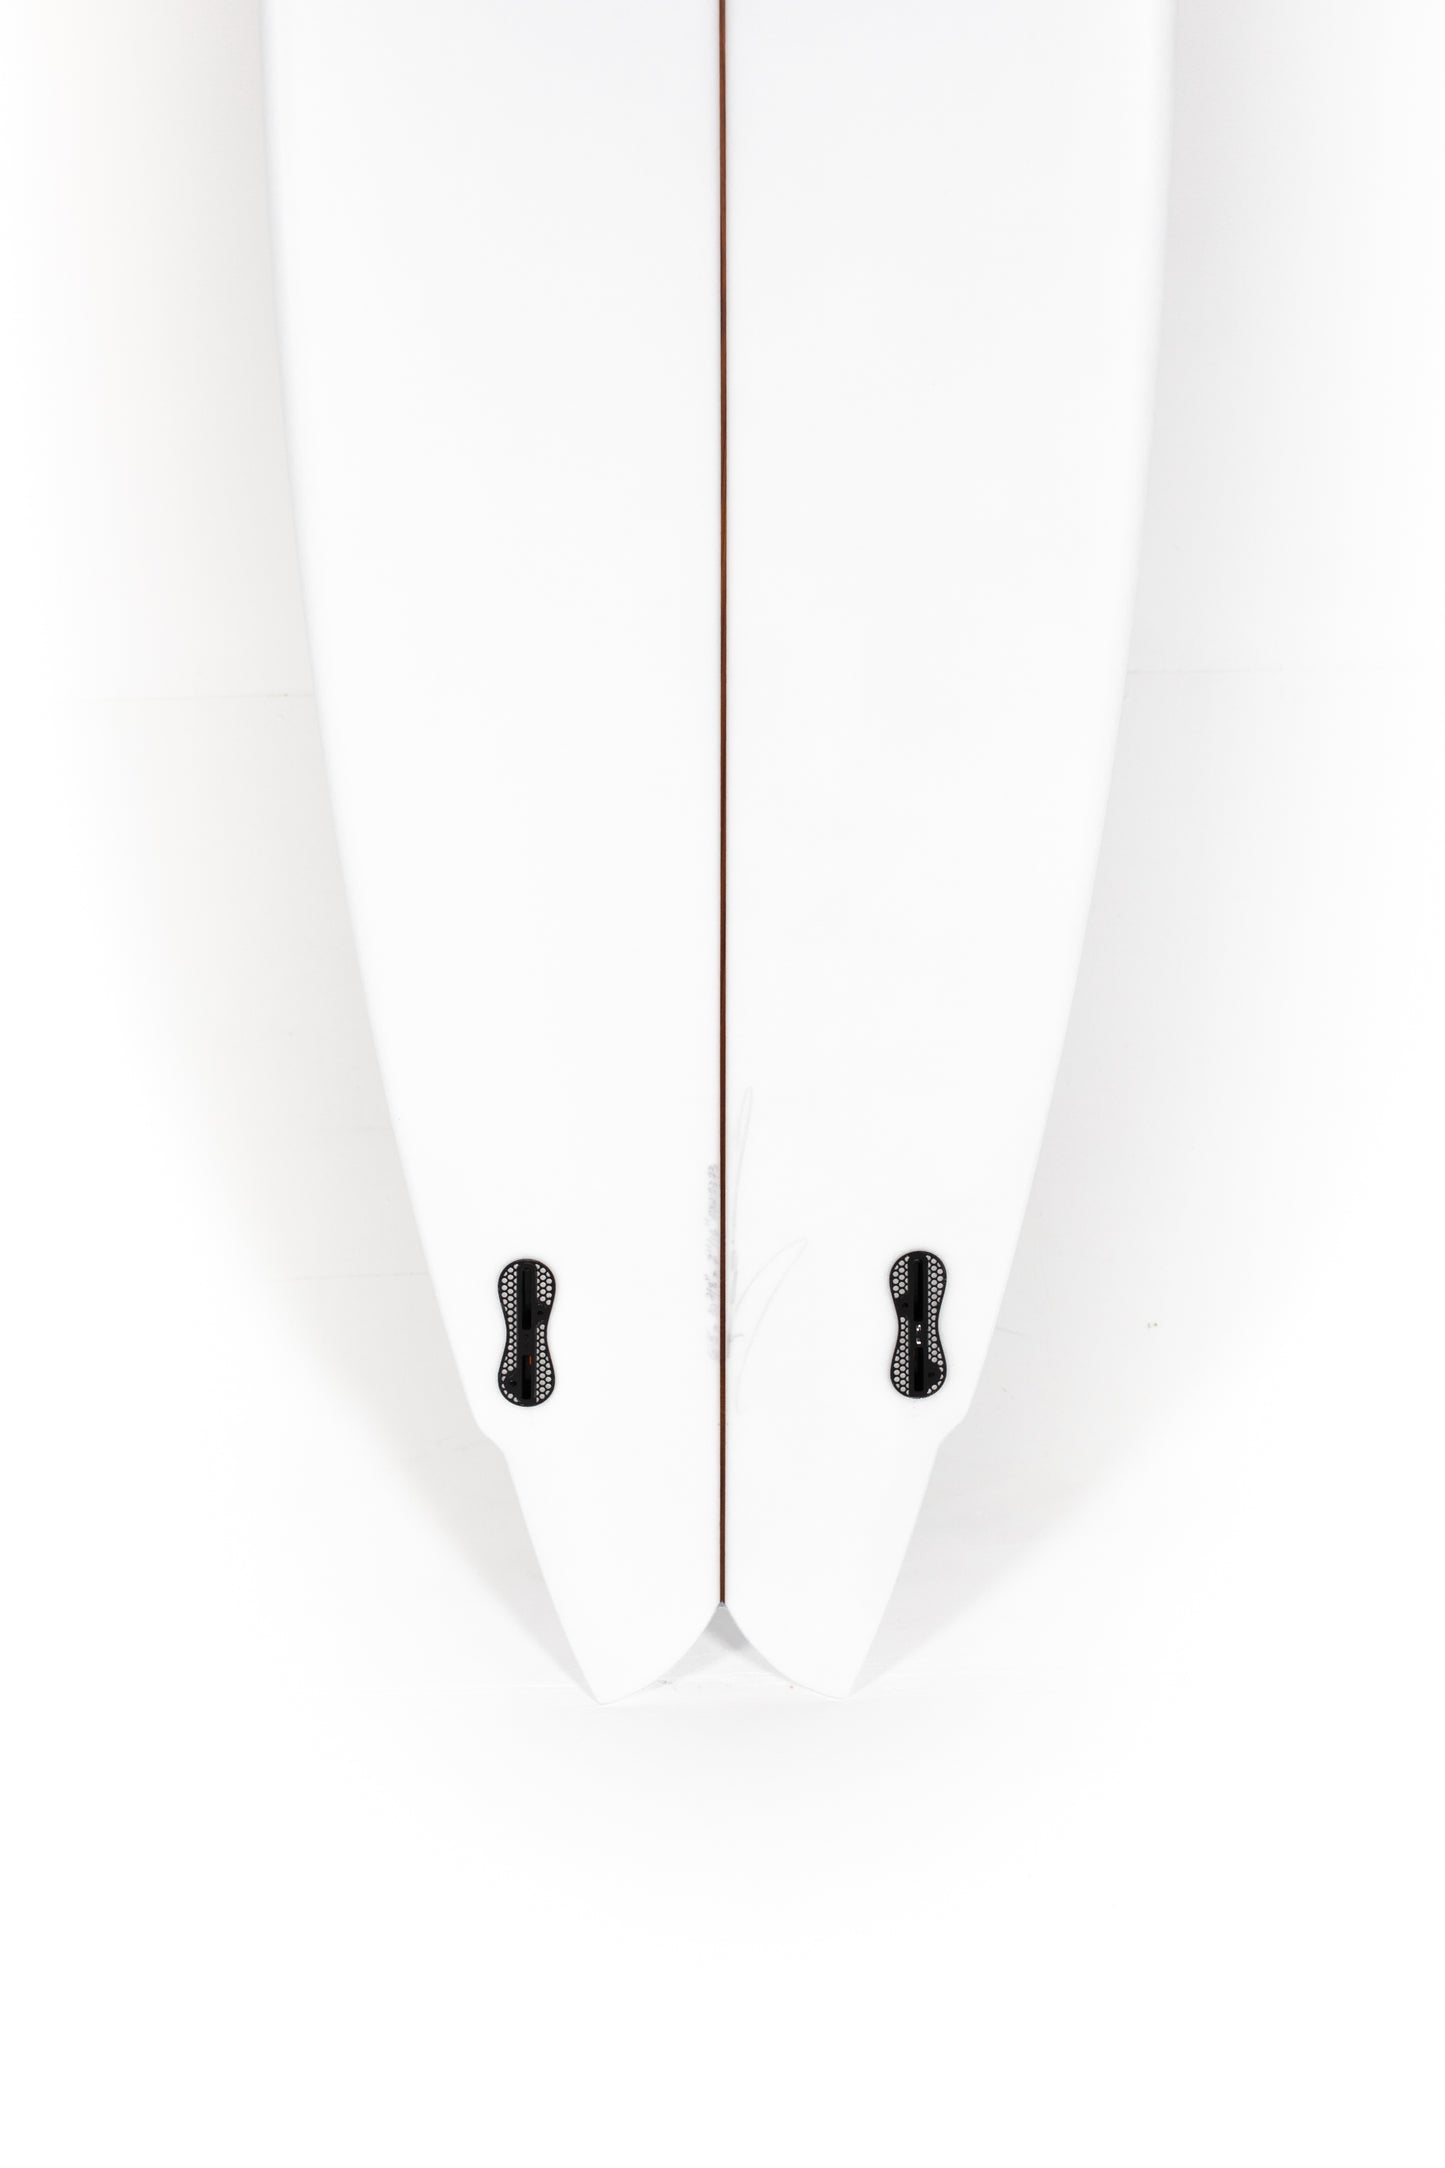 
                  
                    Pukas Surf Shop - Christenson Surfboard  - WOLVERINE by Chris Christenson - 6’8 x 20 7/8 x 2 11/16 - CX05373
                  
                